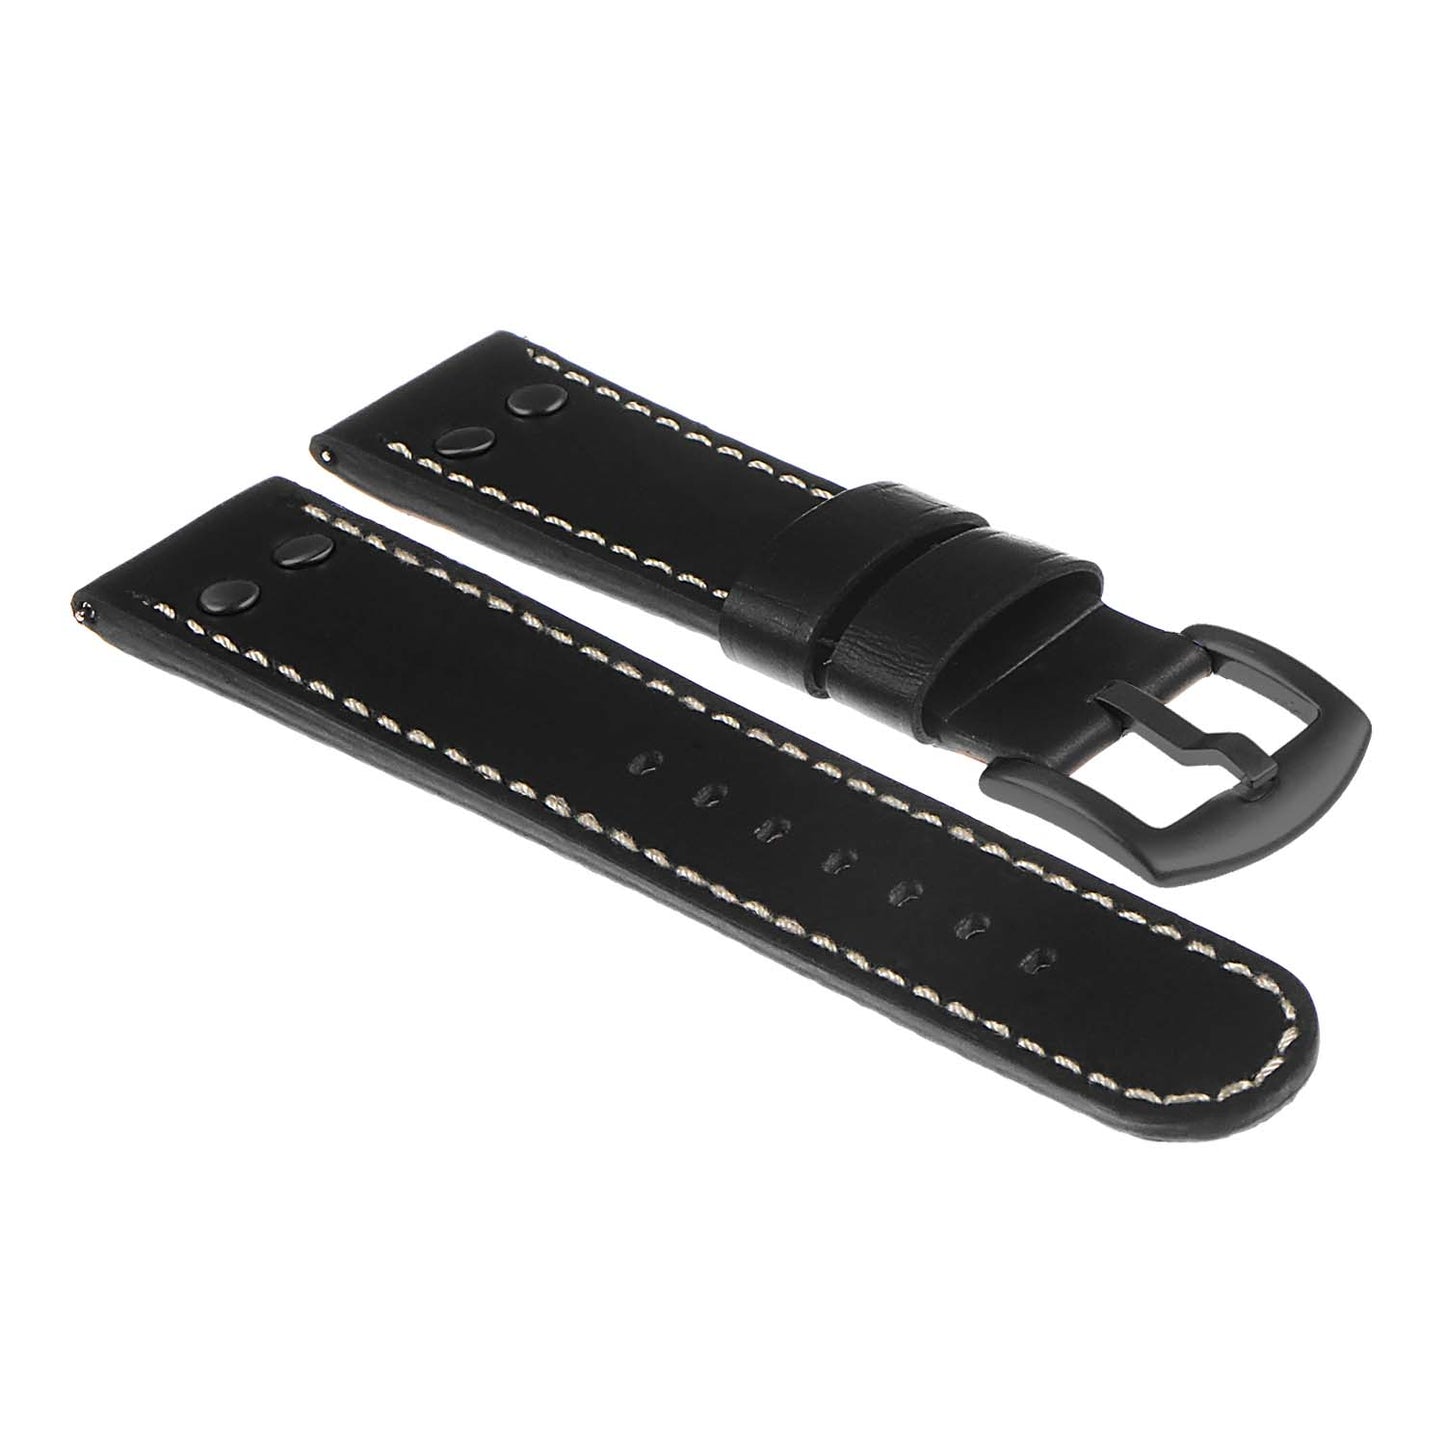 DASSARI Pilot Leather Watch Band for Samsung Gear S3 Classic